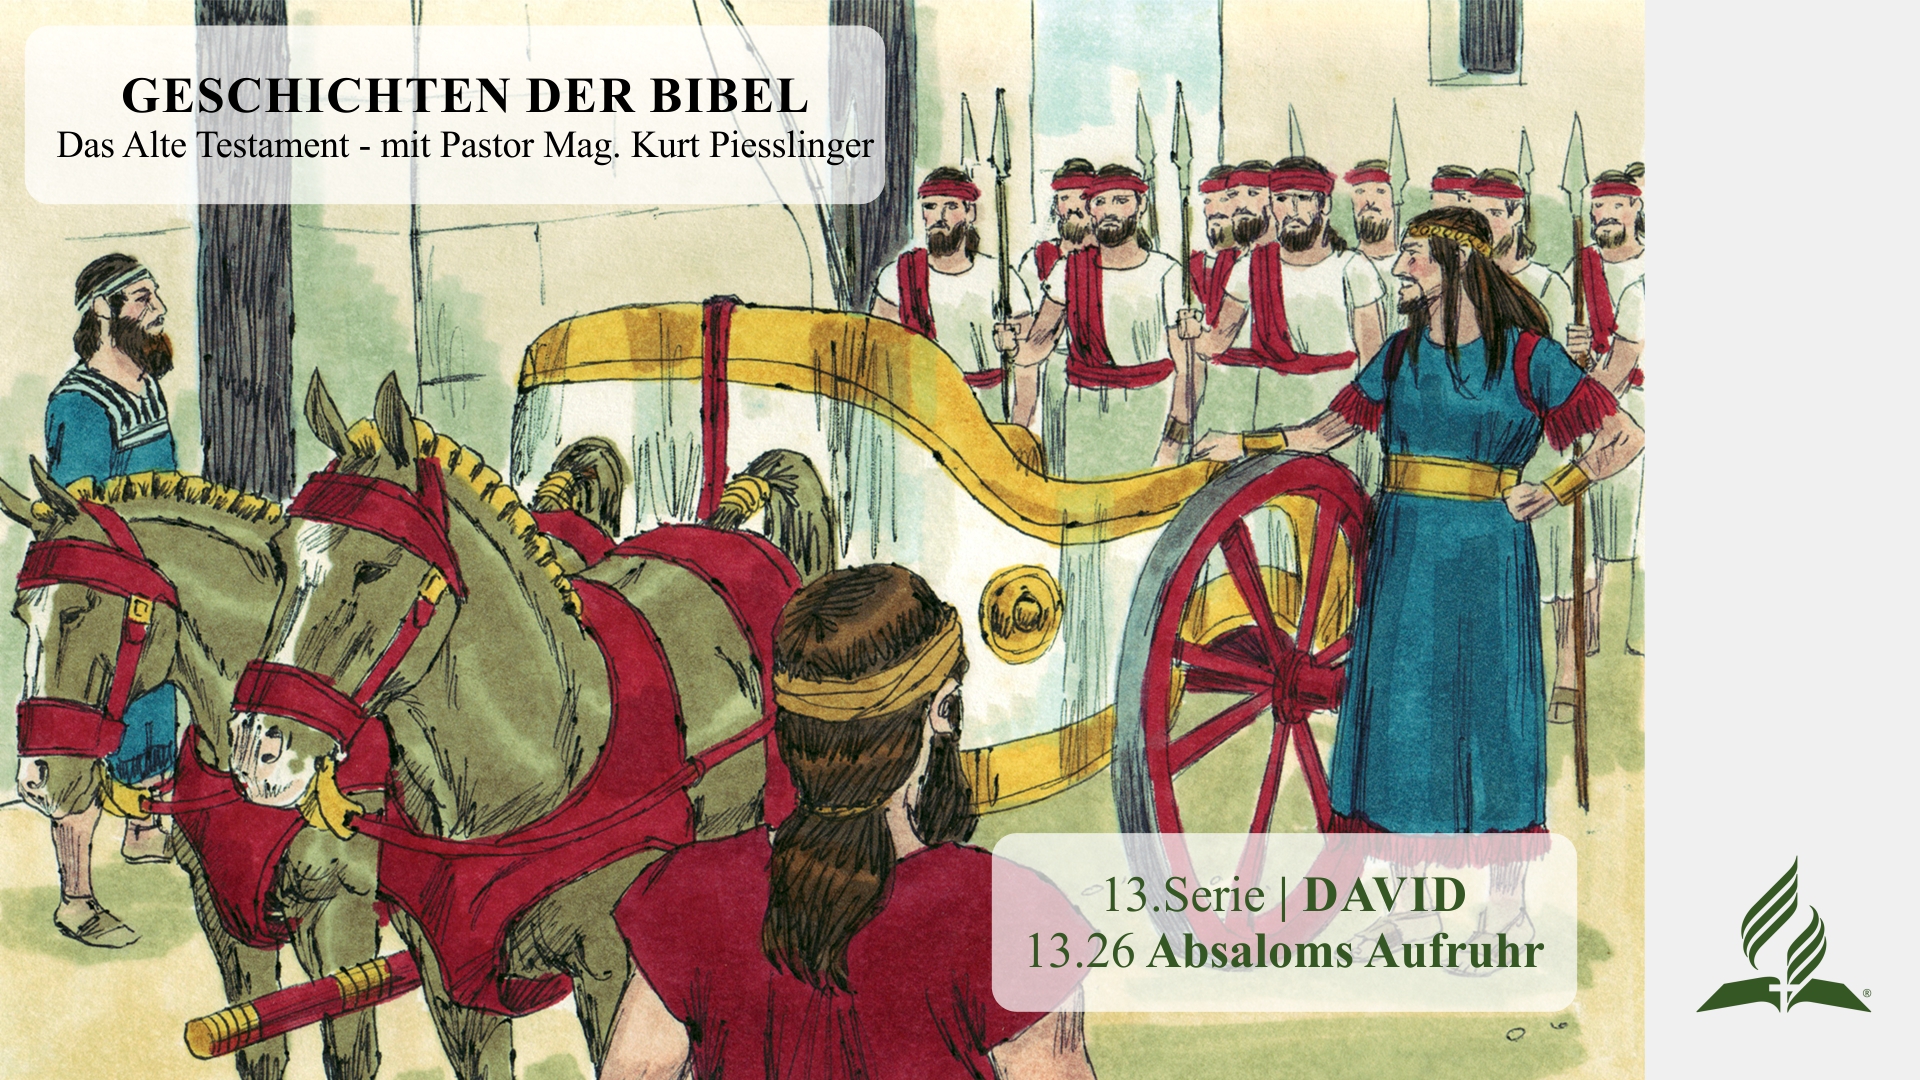 GESCHICHTEN DER BIBEL: 13.26 Absaloms Aufruhr – 13.DAVID | Pastor Mag. Kurt Piesslinger